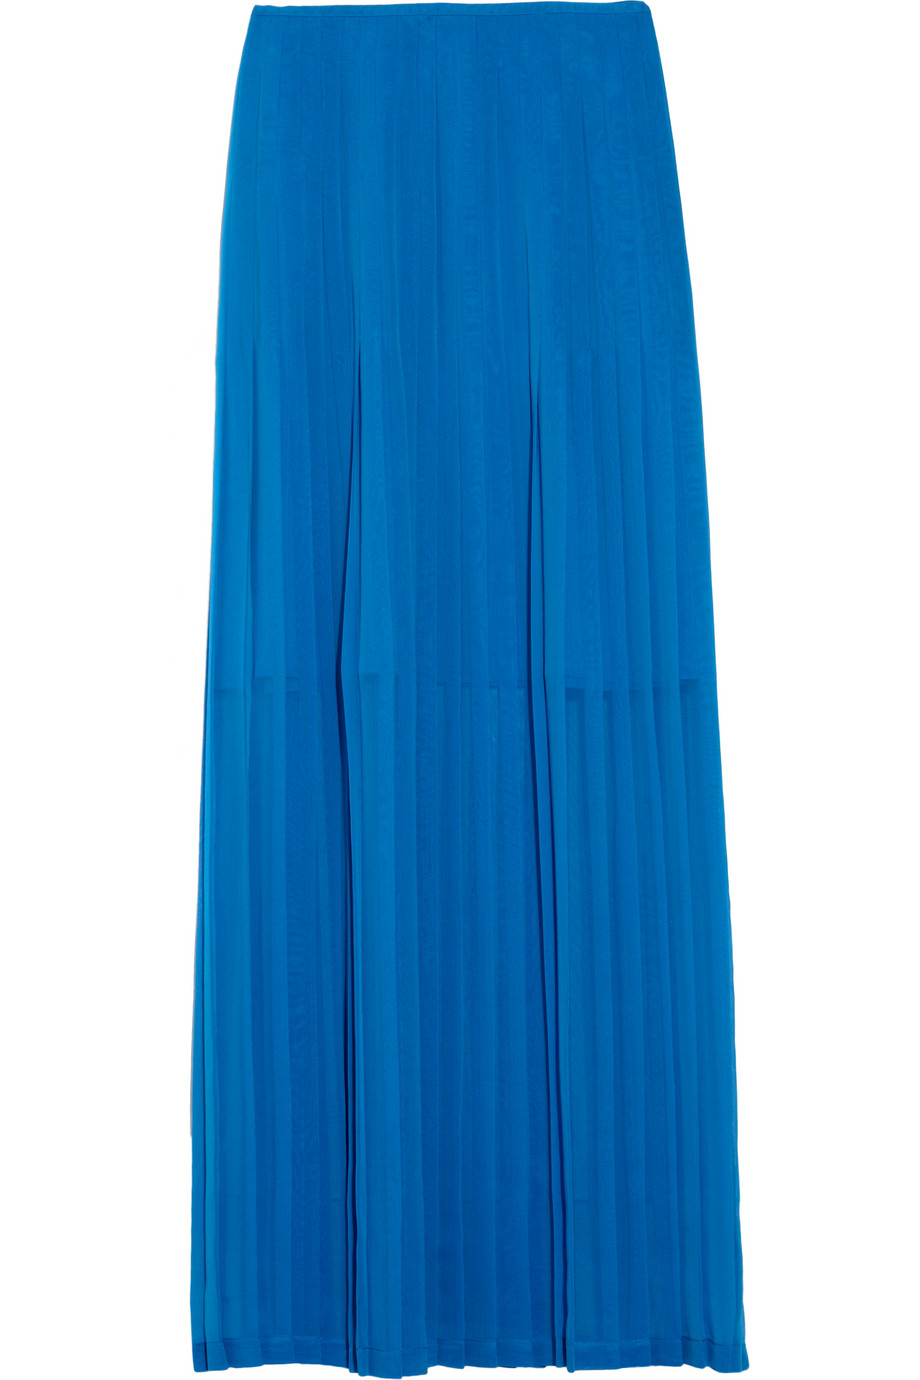 Catherine Malandrino Pleated Chiffon Maxi Skirt in Blue | Lyst